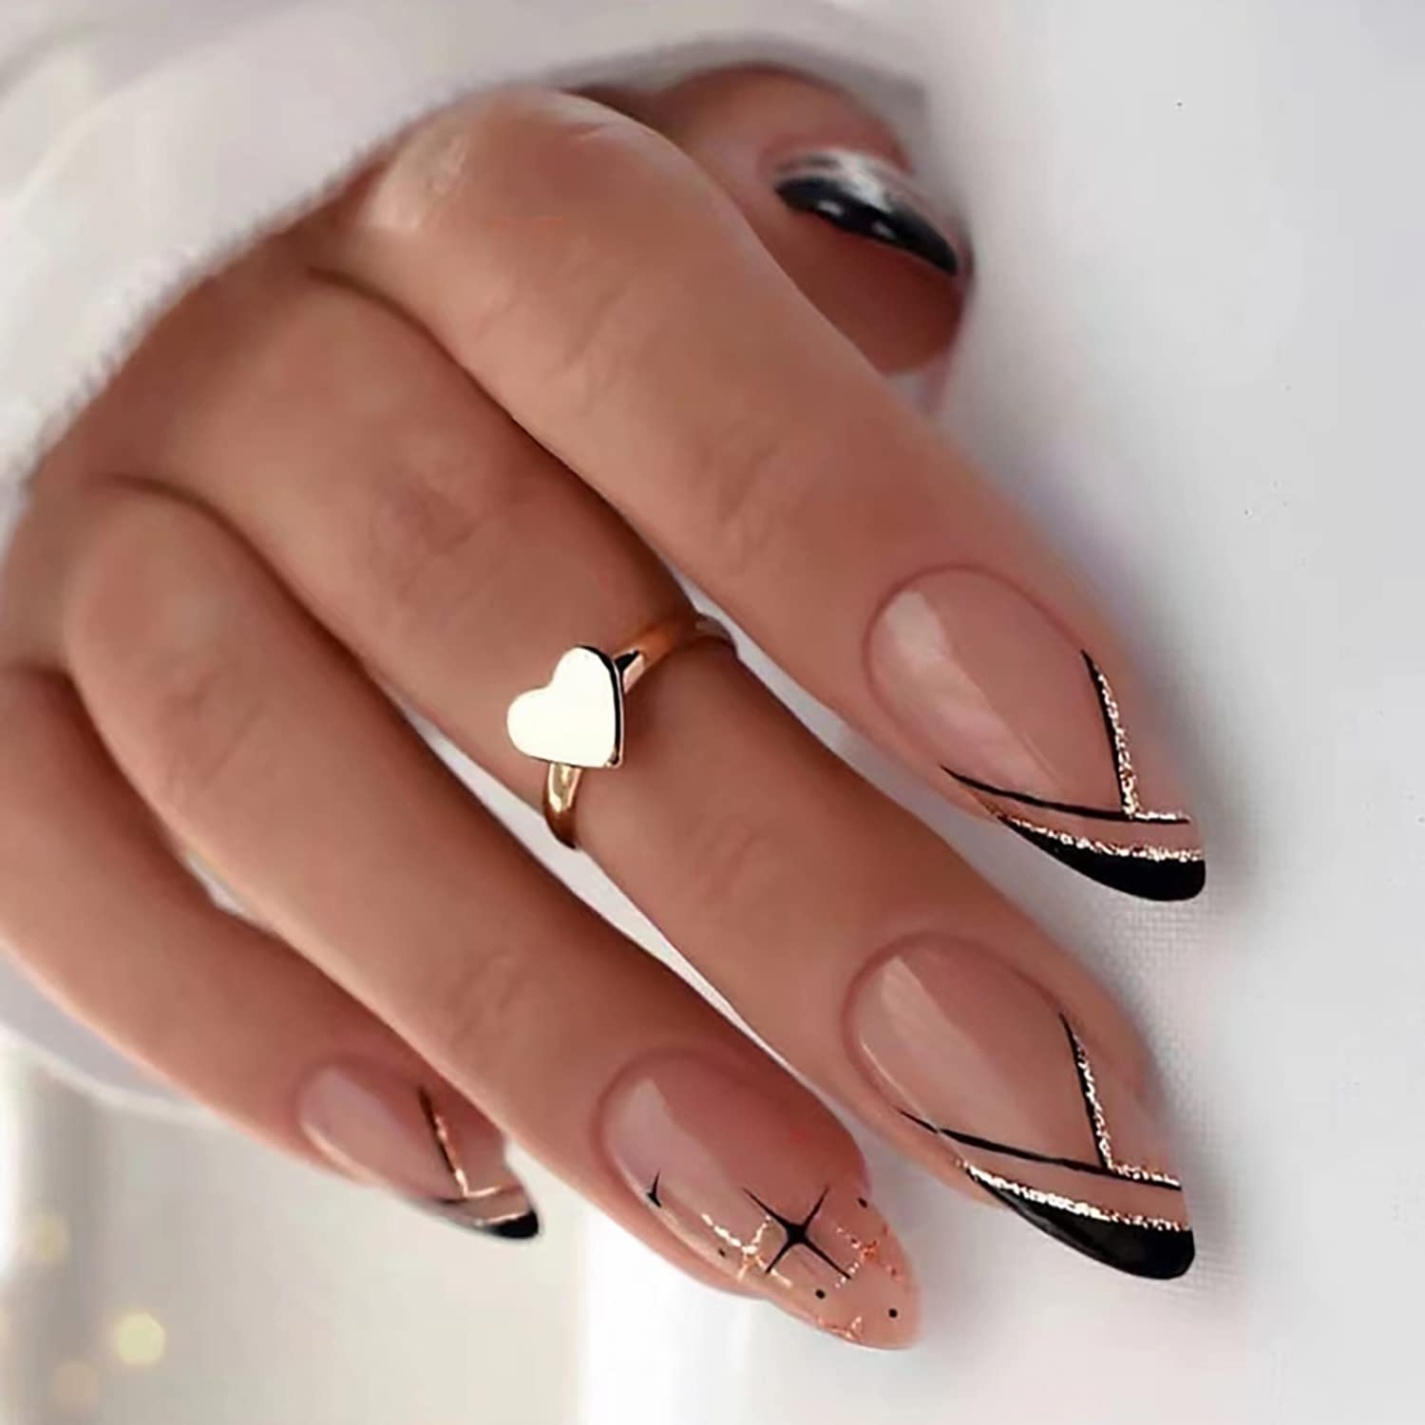 almond nails design Niche Utama Home m.media-amazon.com/images/I/lkMIUqKlL